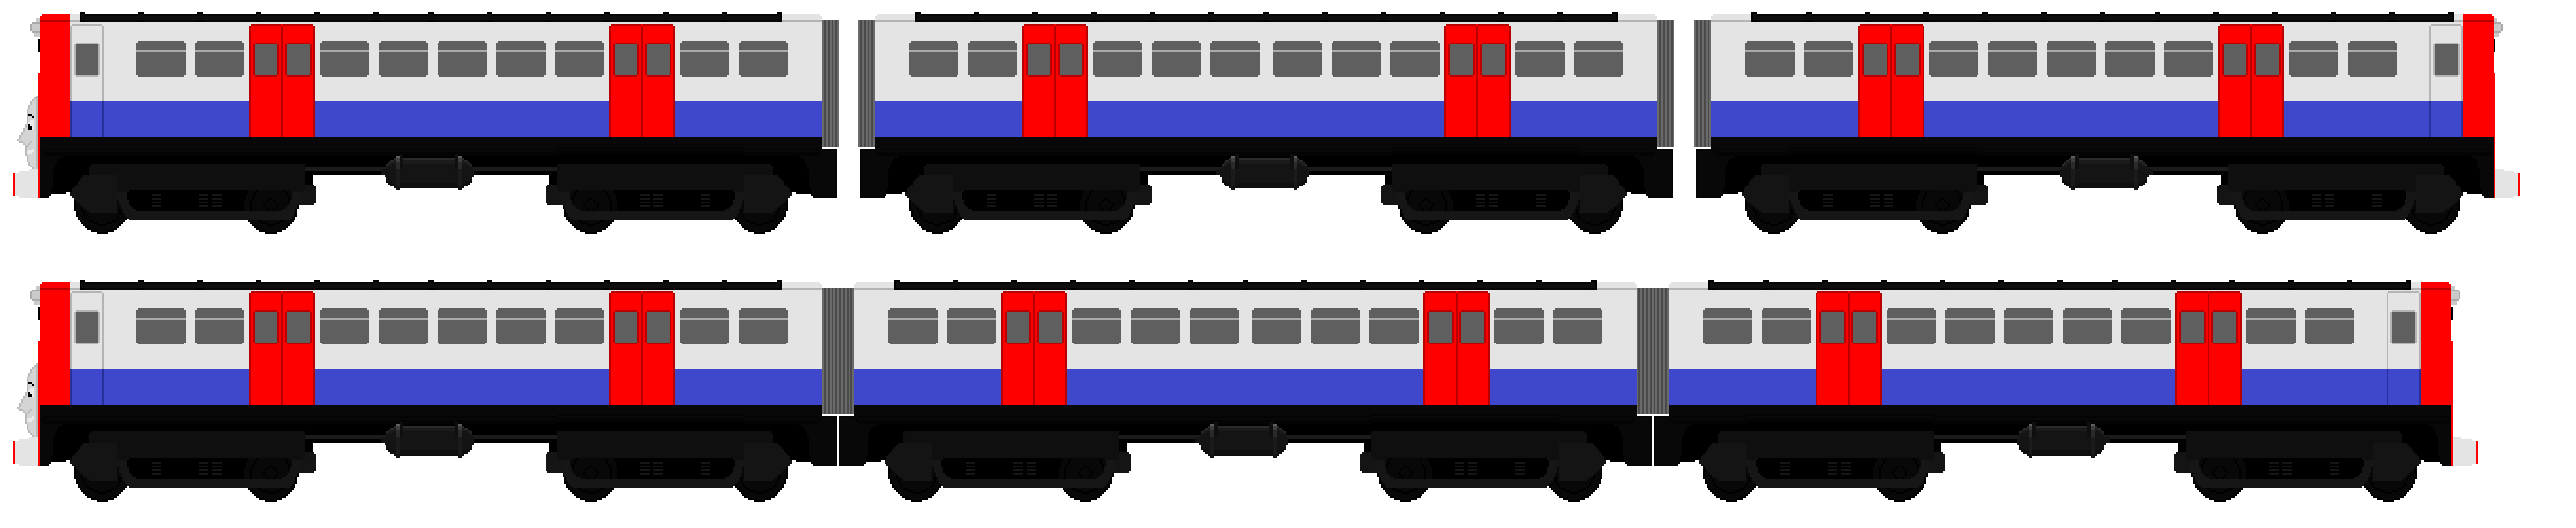 . Hdpng.com London Passenager Train Design 3 By Jamesfan1991 - Trains Side View, Transparent background PNG HD thumbnail